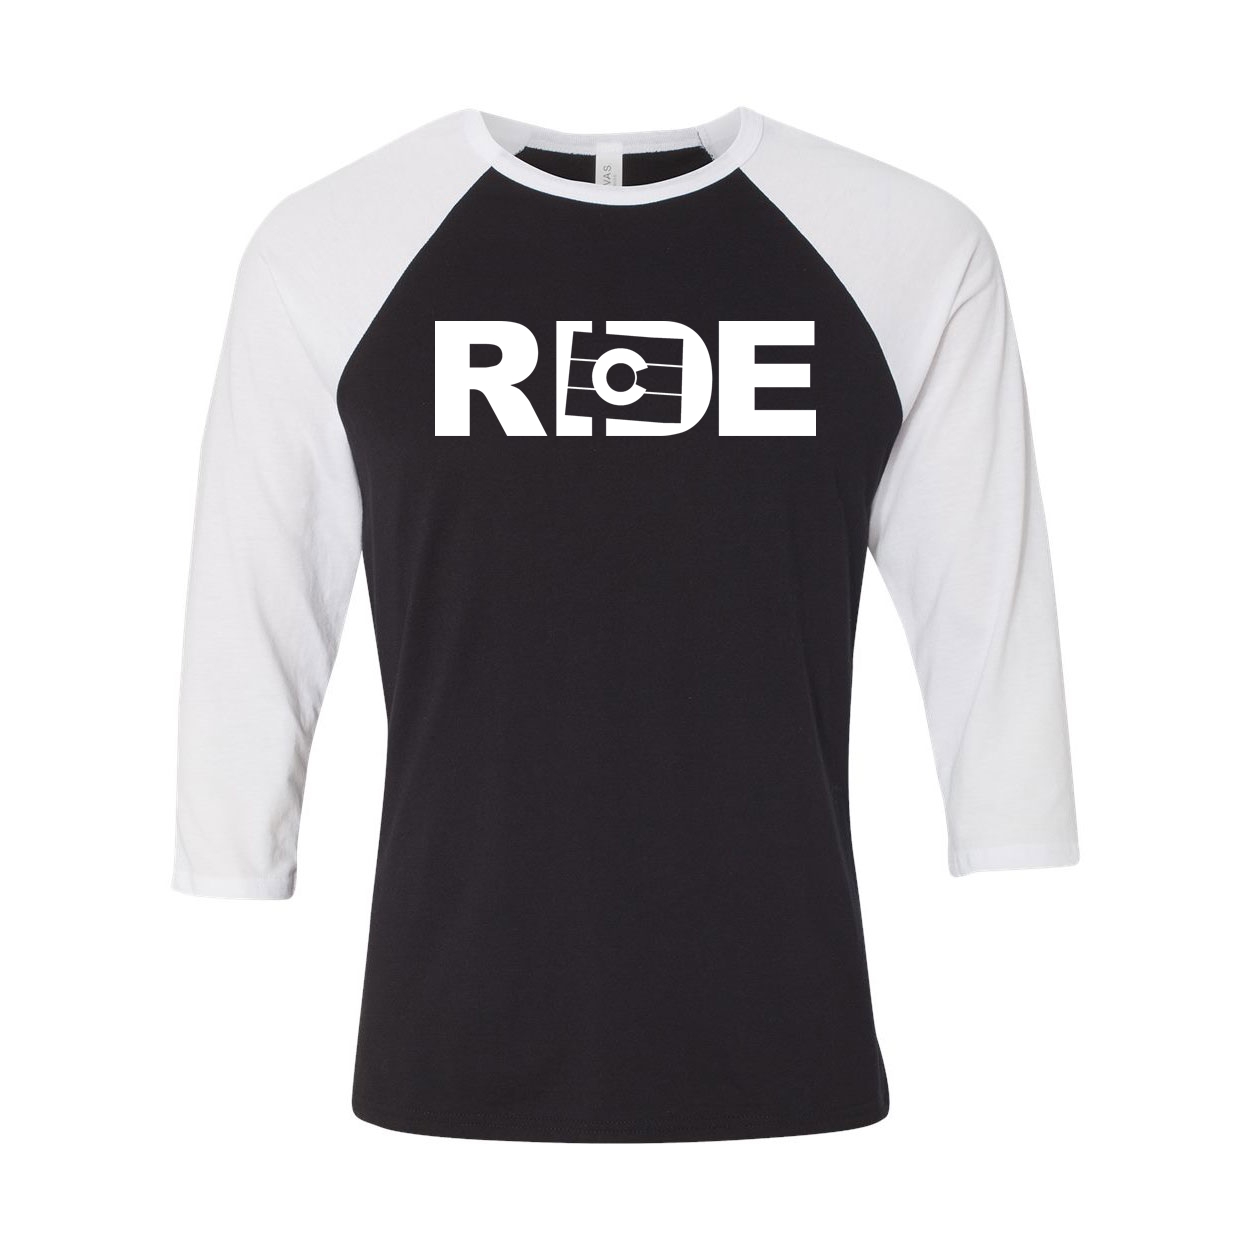 Ride Colorado Classic Raglan Shirt Black/White (White Logo)